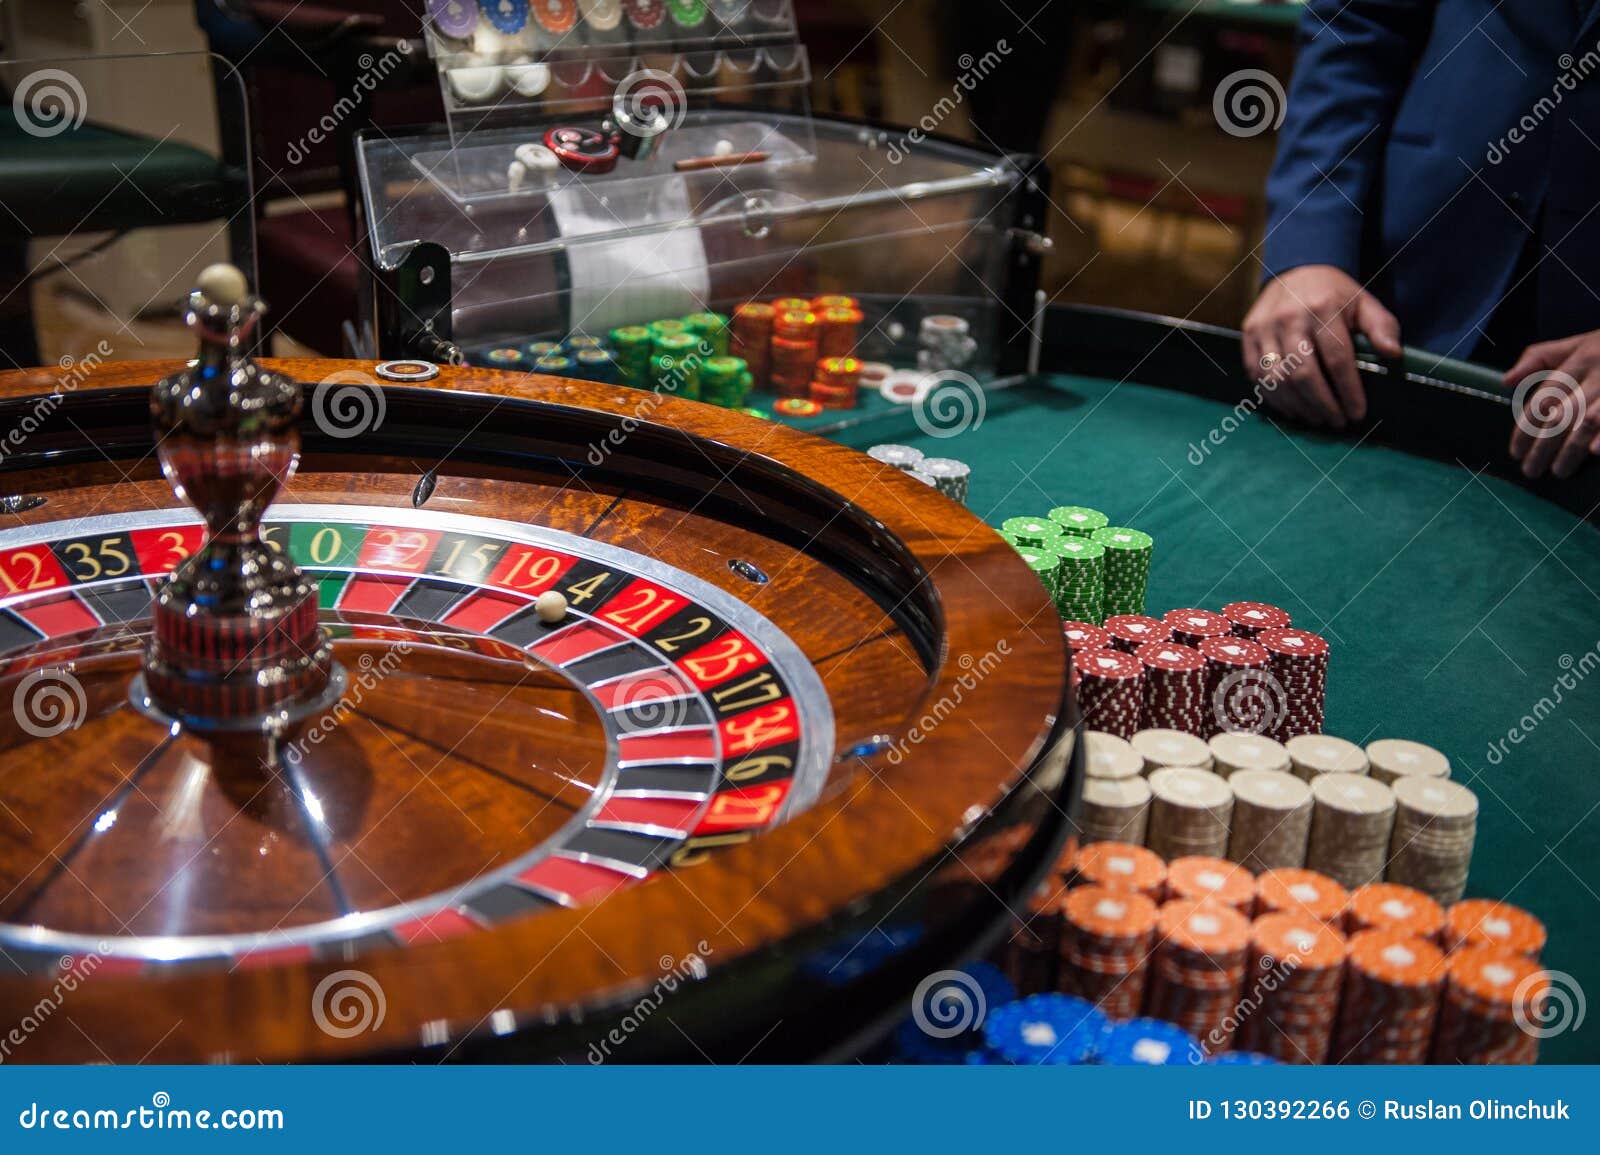 Best casinos gambling super